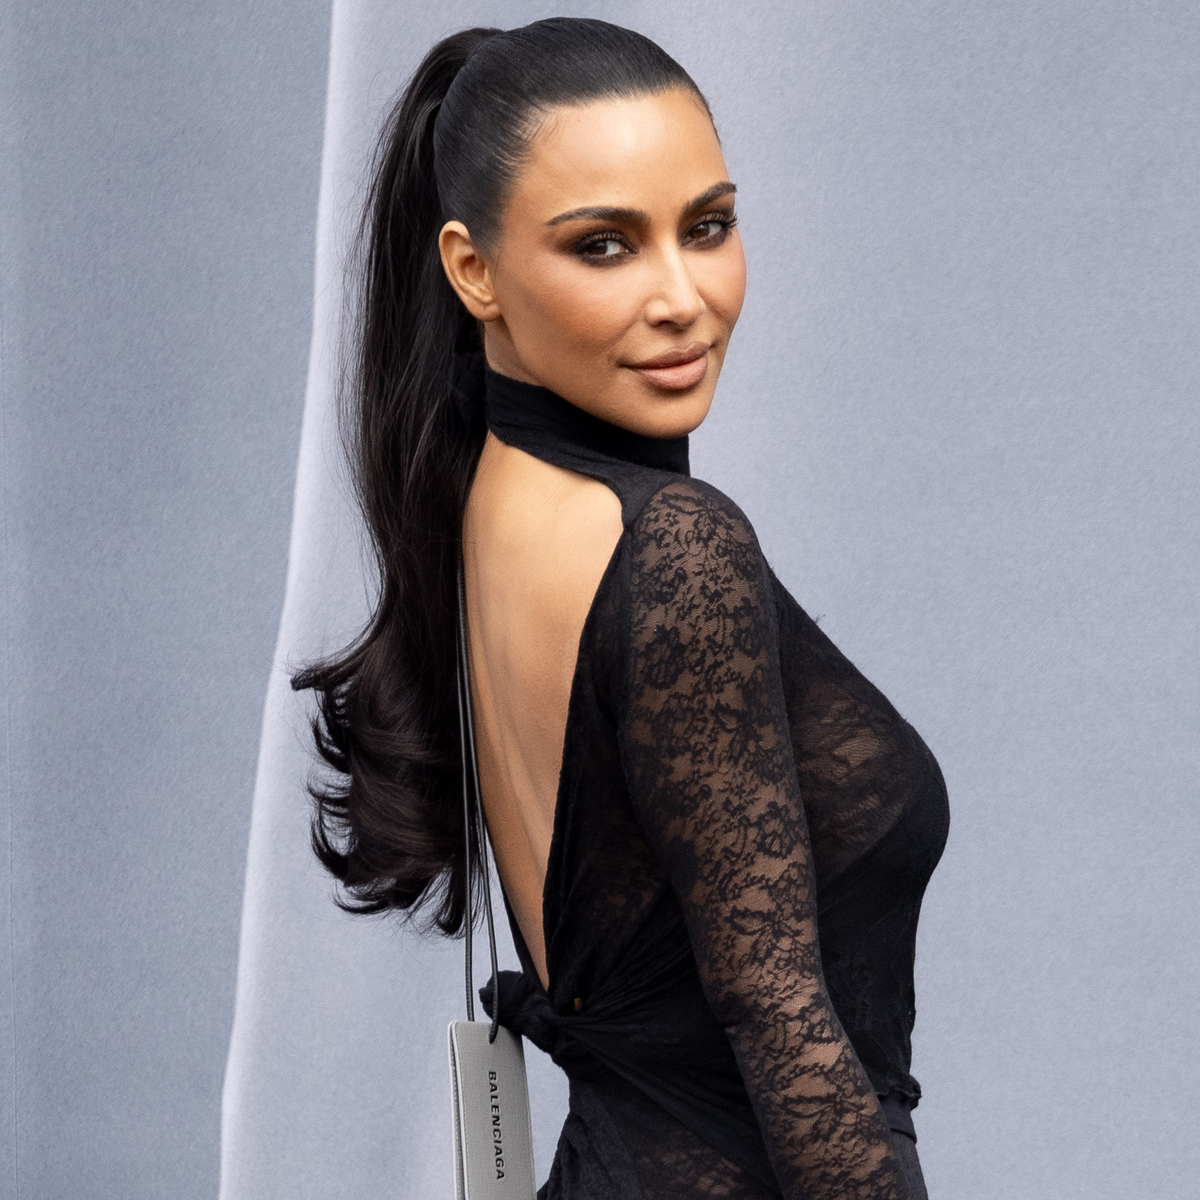 The Kardashians Season 5 Premiere Date Revealed With Trailer